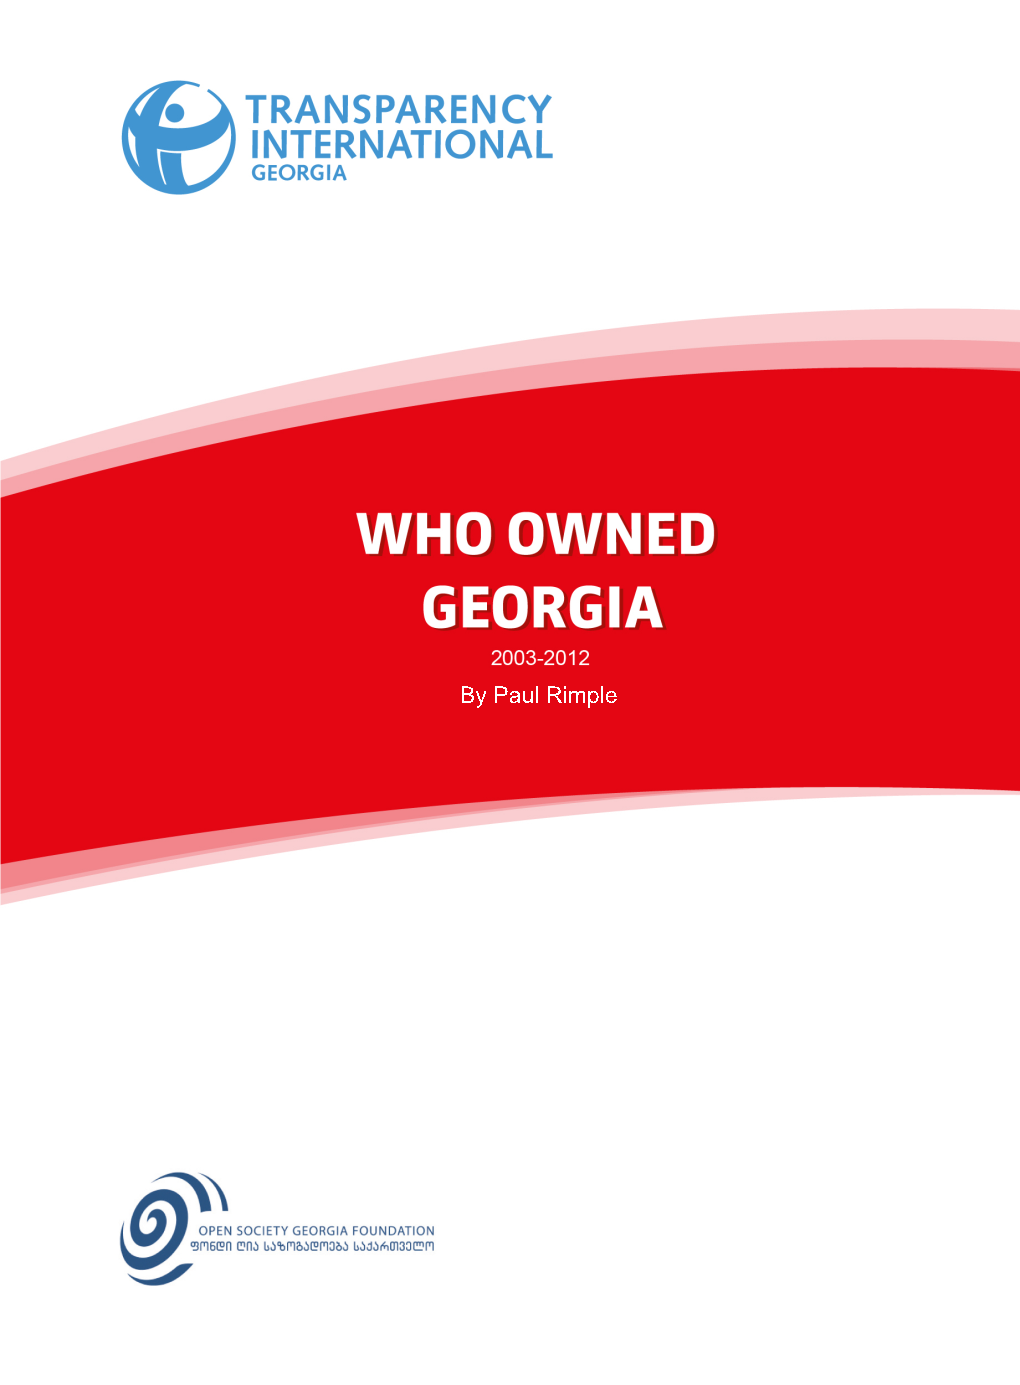 Who Owned Georgia 2002-2012.Pdf